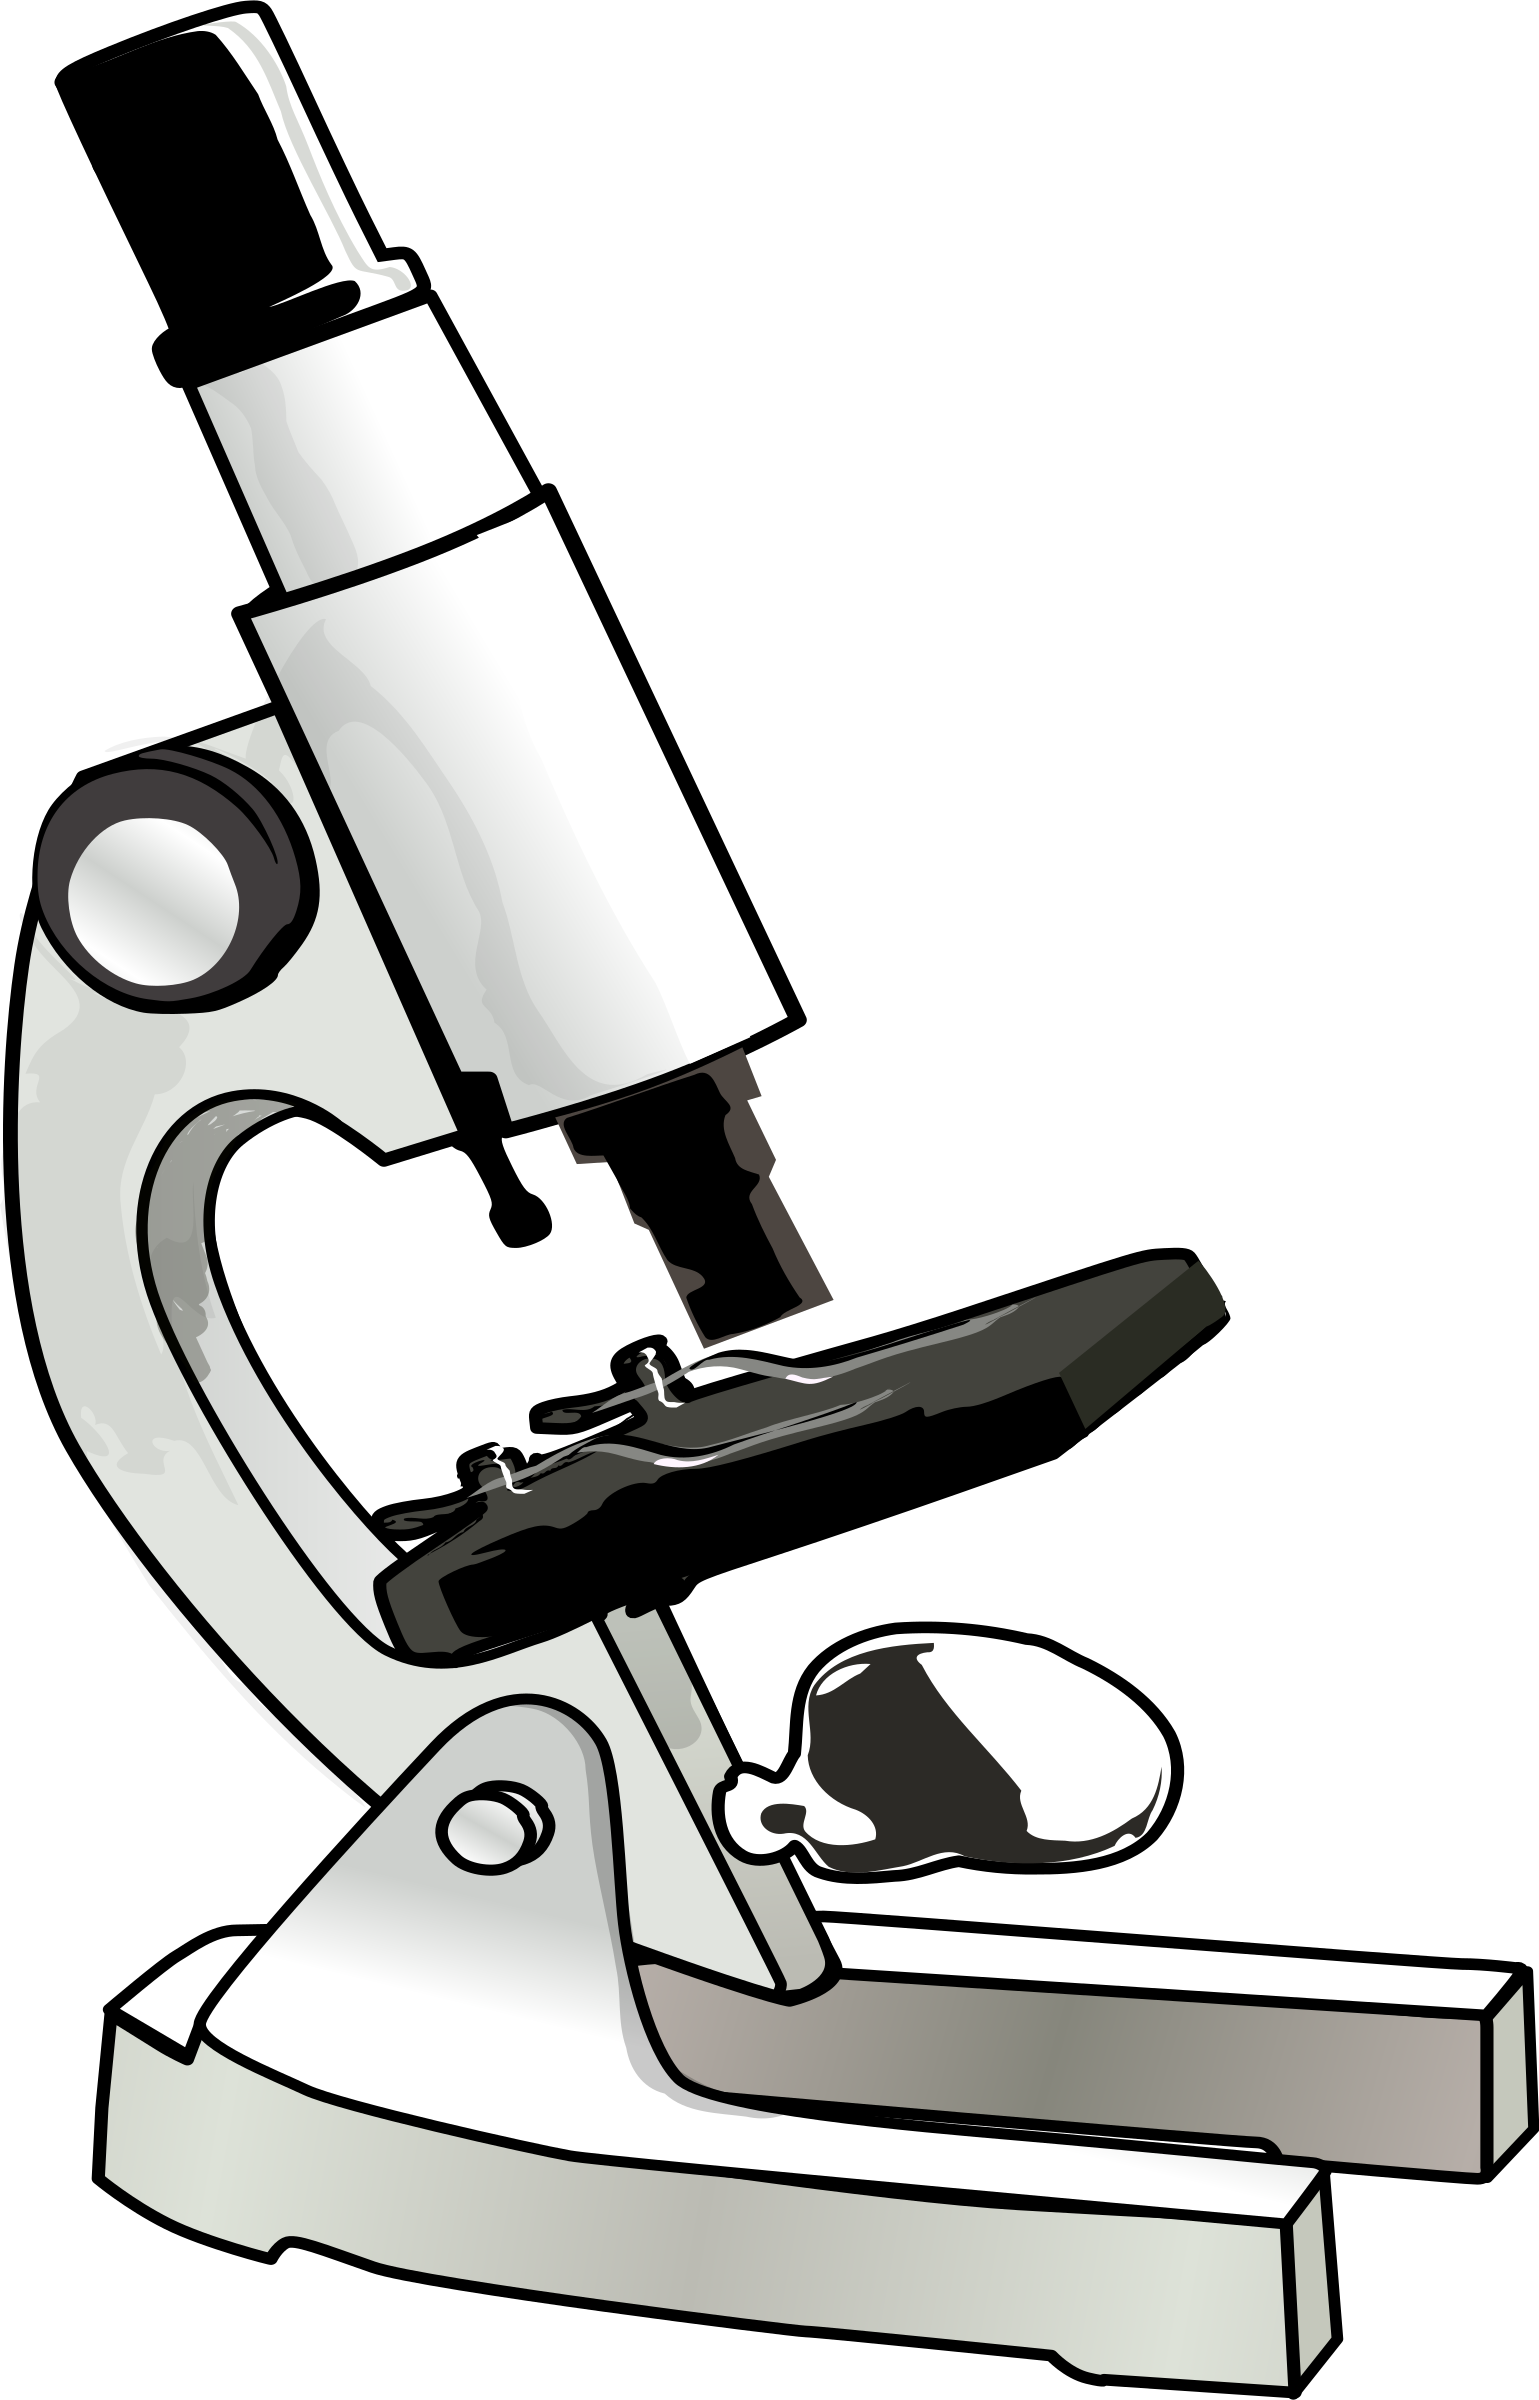 detective clipart microscope